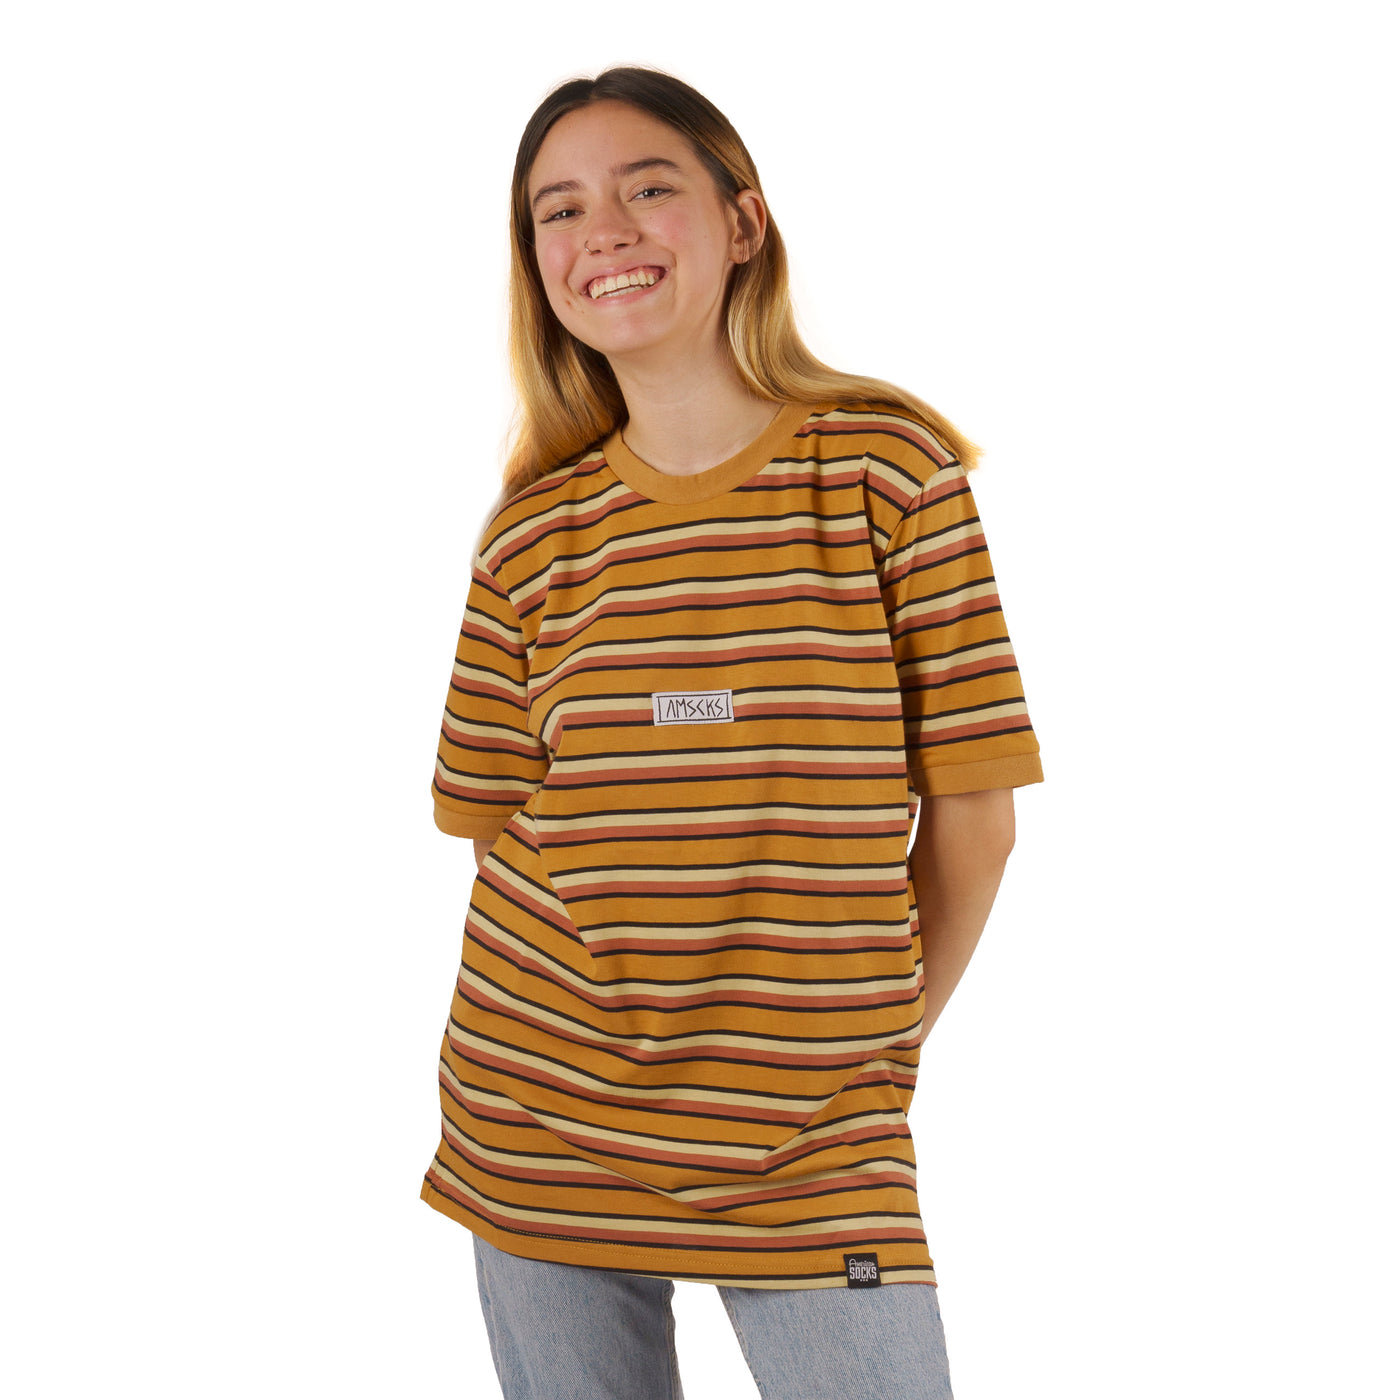 AMSCKS Striped Pale - Camiseta